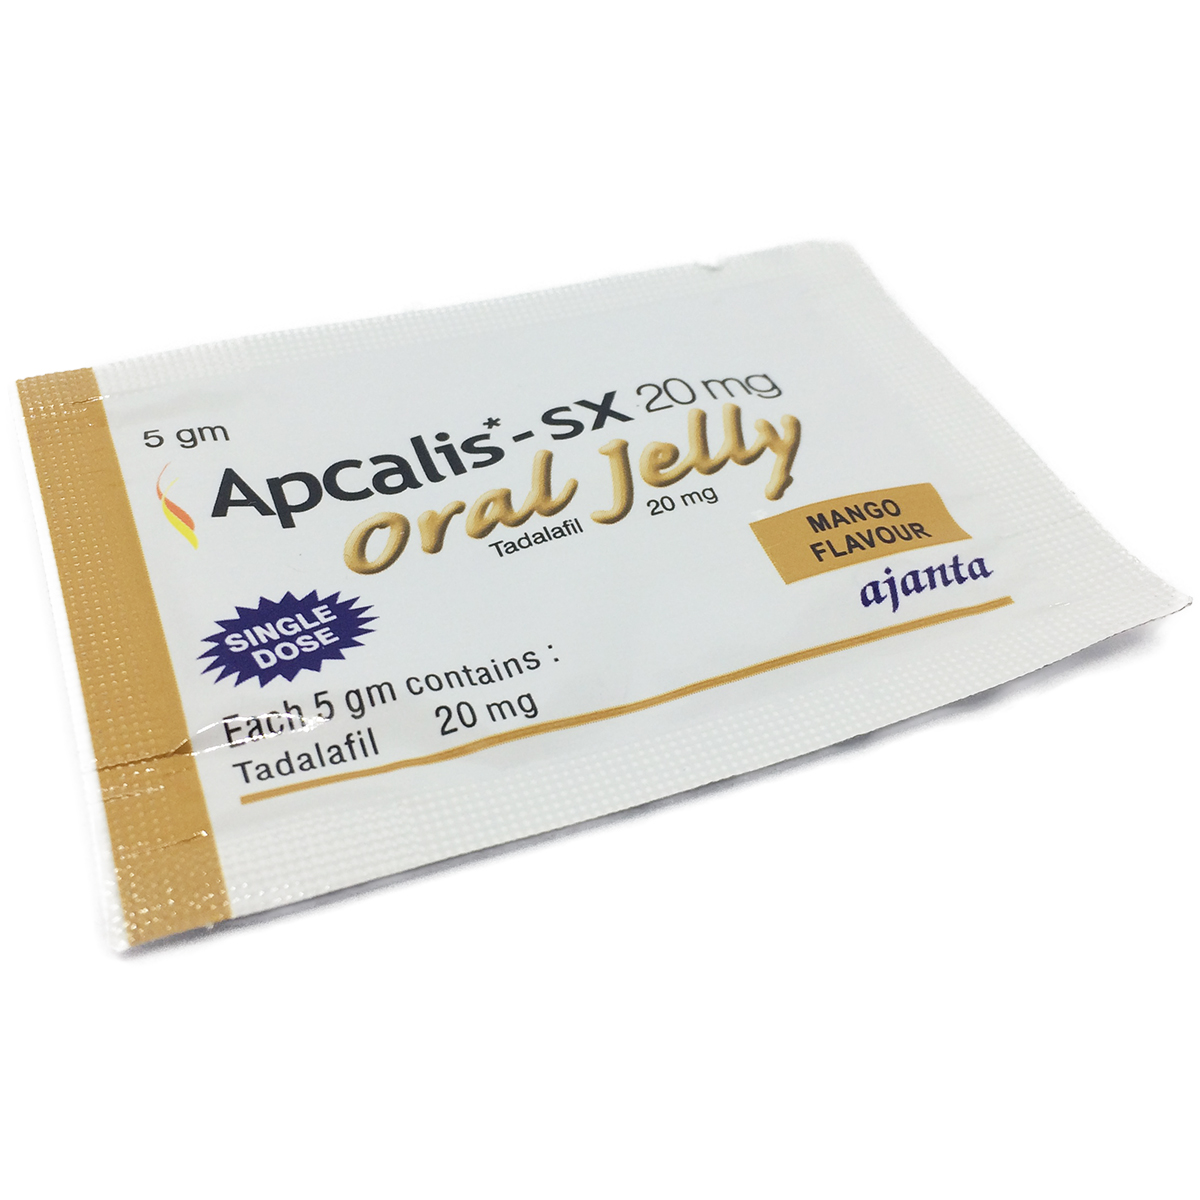 Купить Apcalis-sx Oral Jelly x 7 шт